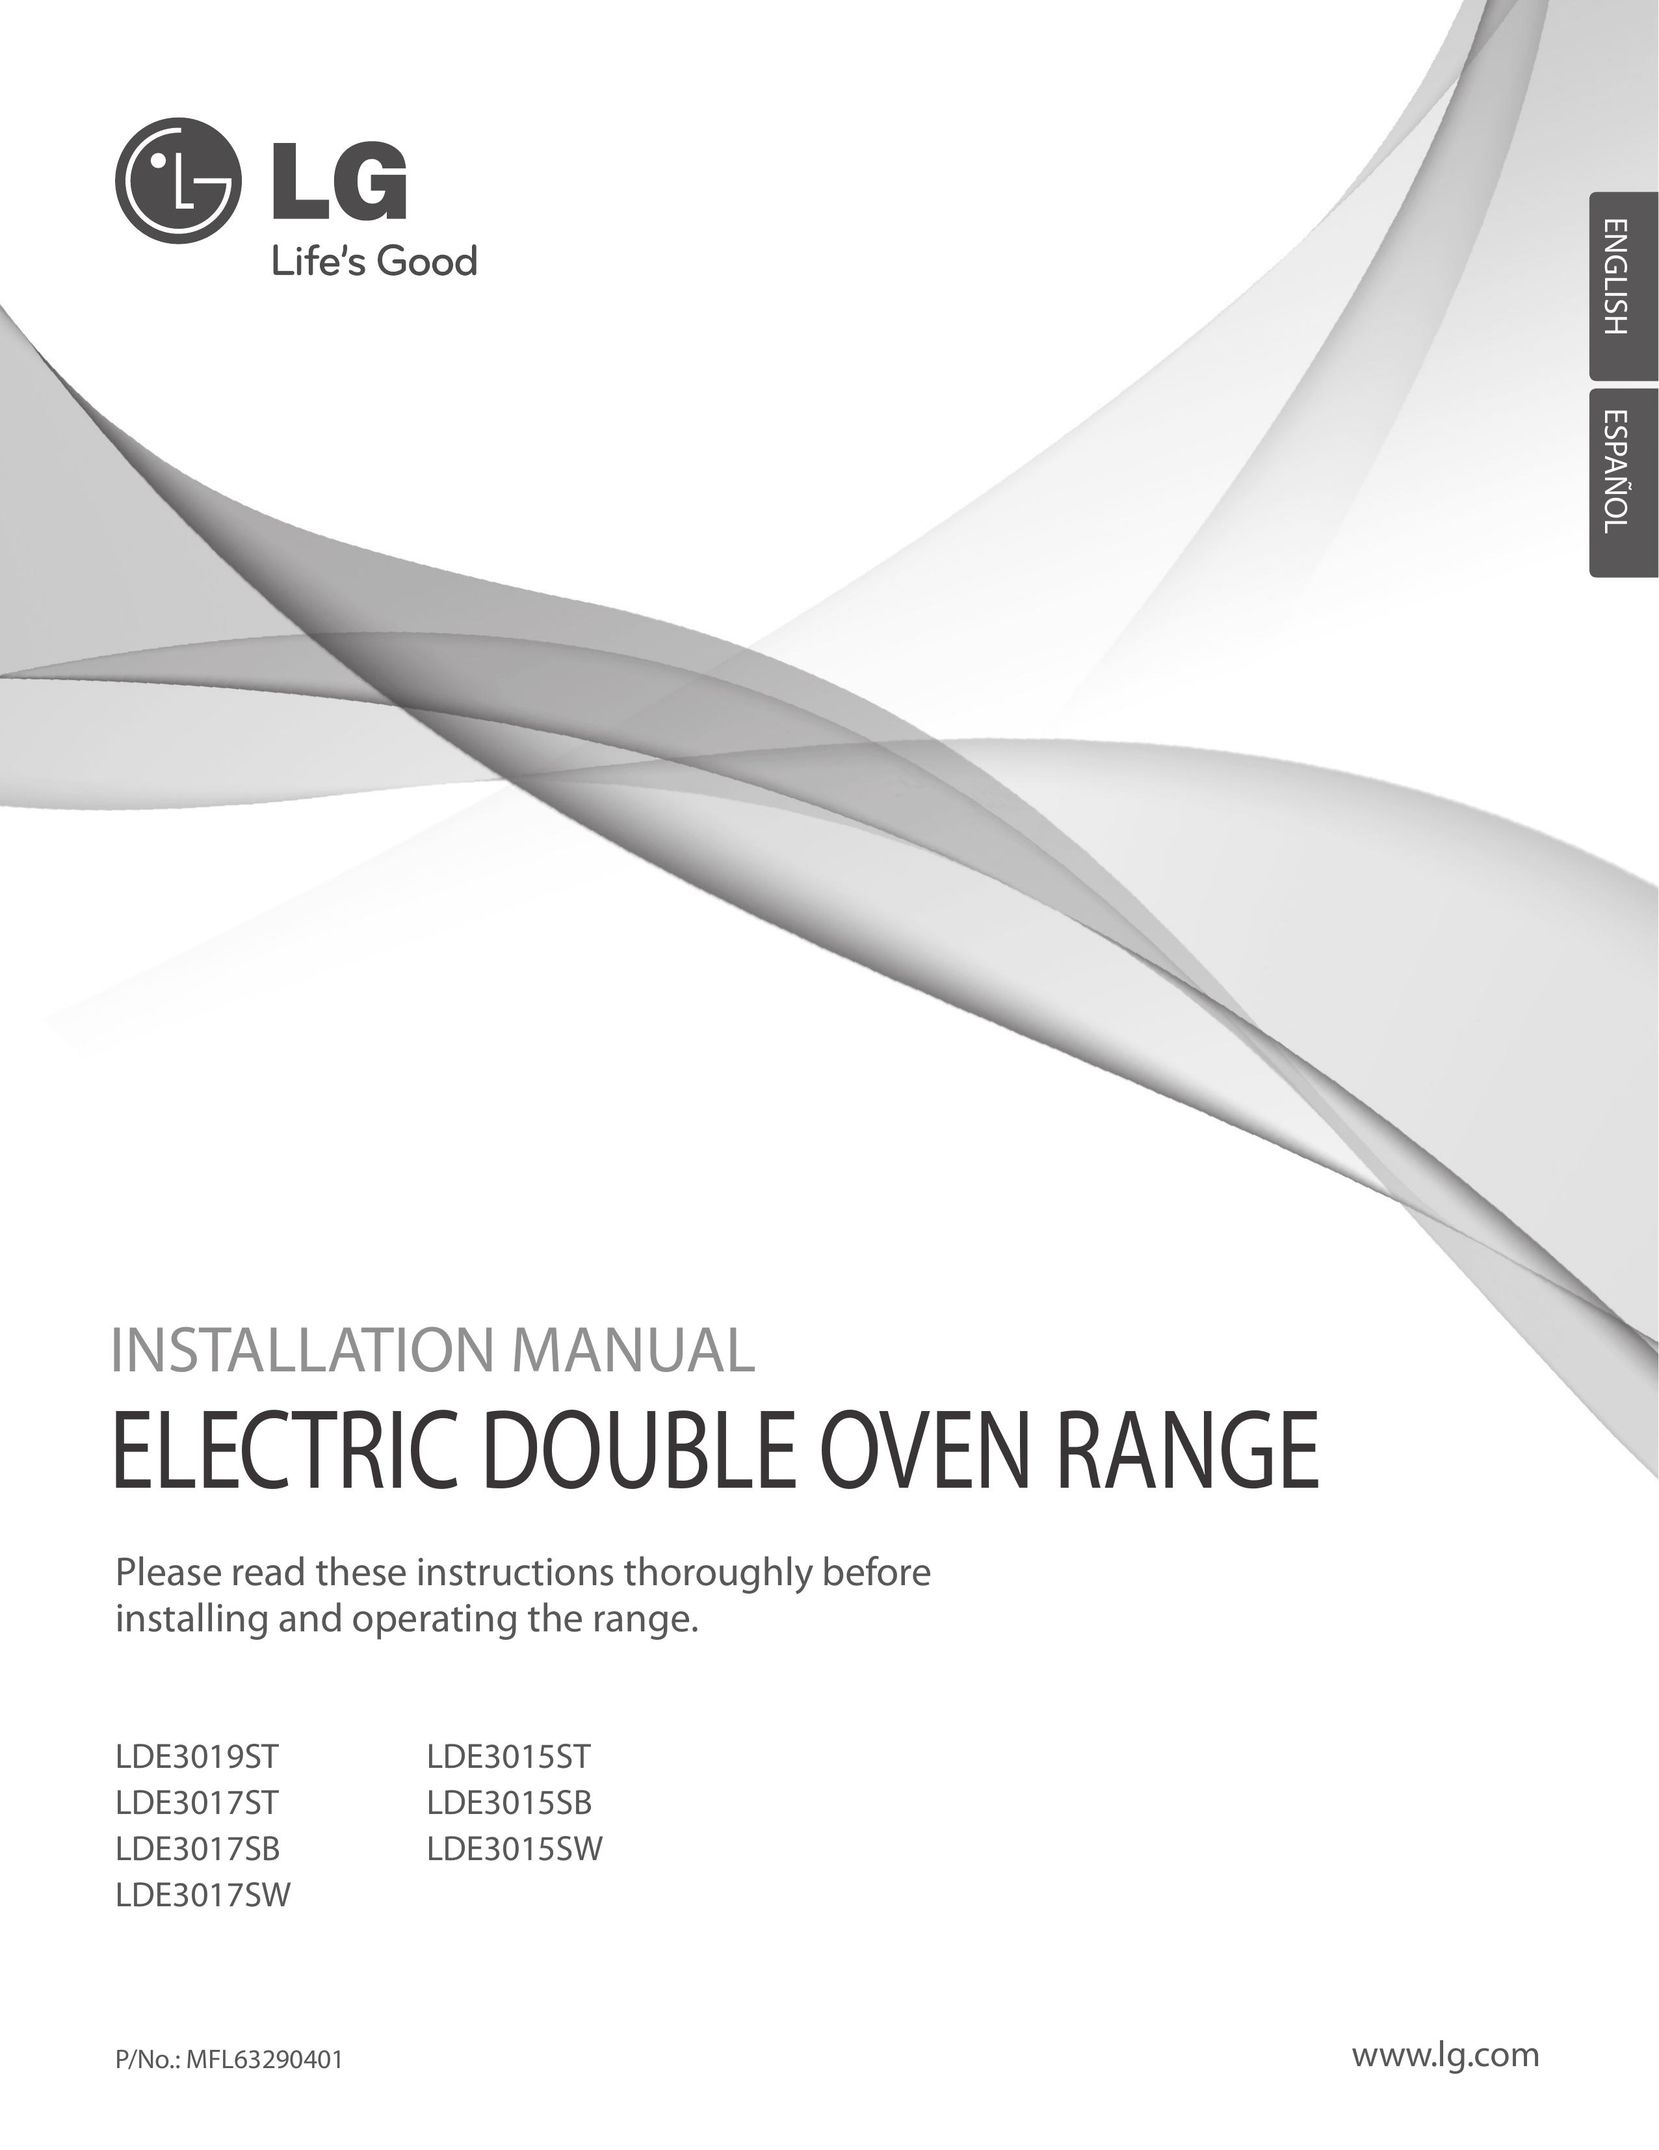 LG Electronics LDE3017SB Double Oven User Manual